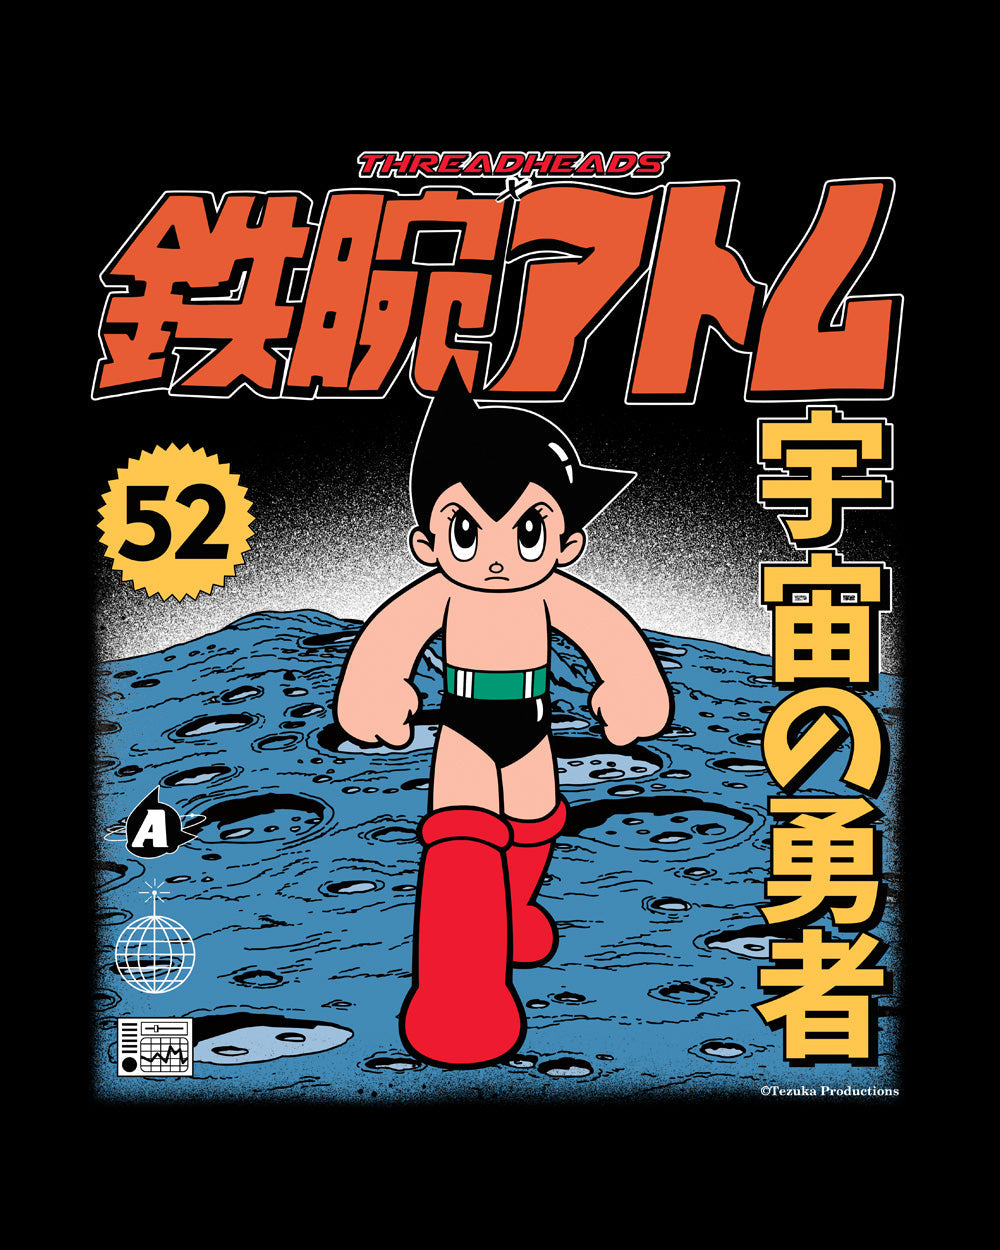 Astro Boy Moon Classic Japanese Manga Anime Cartoon Comic Superhero Retro Vintage Officially Licensed Cotton T-Shirt